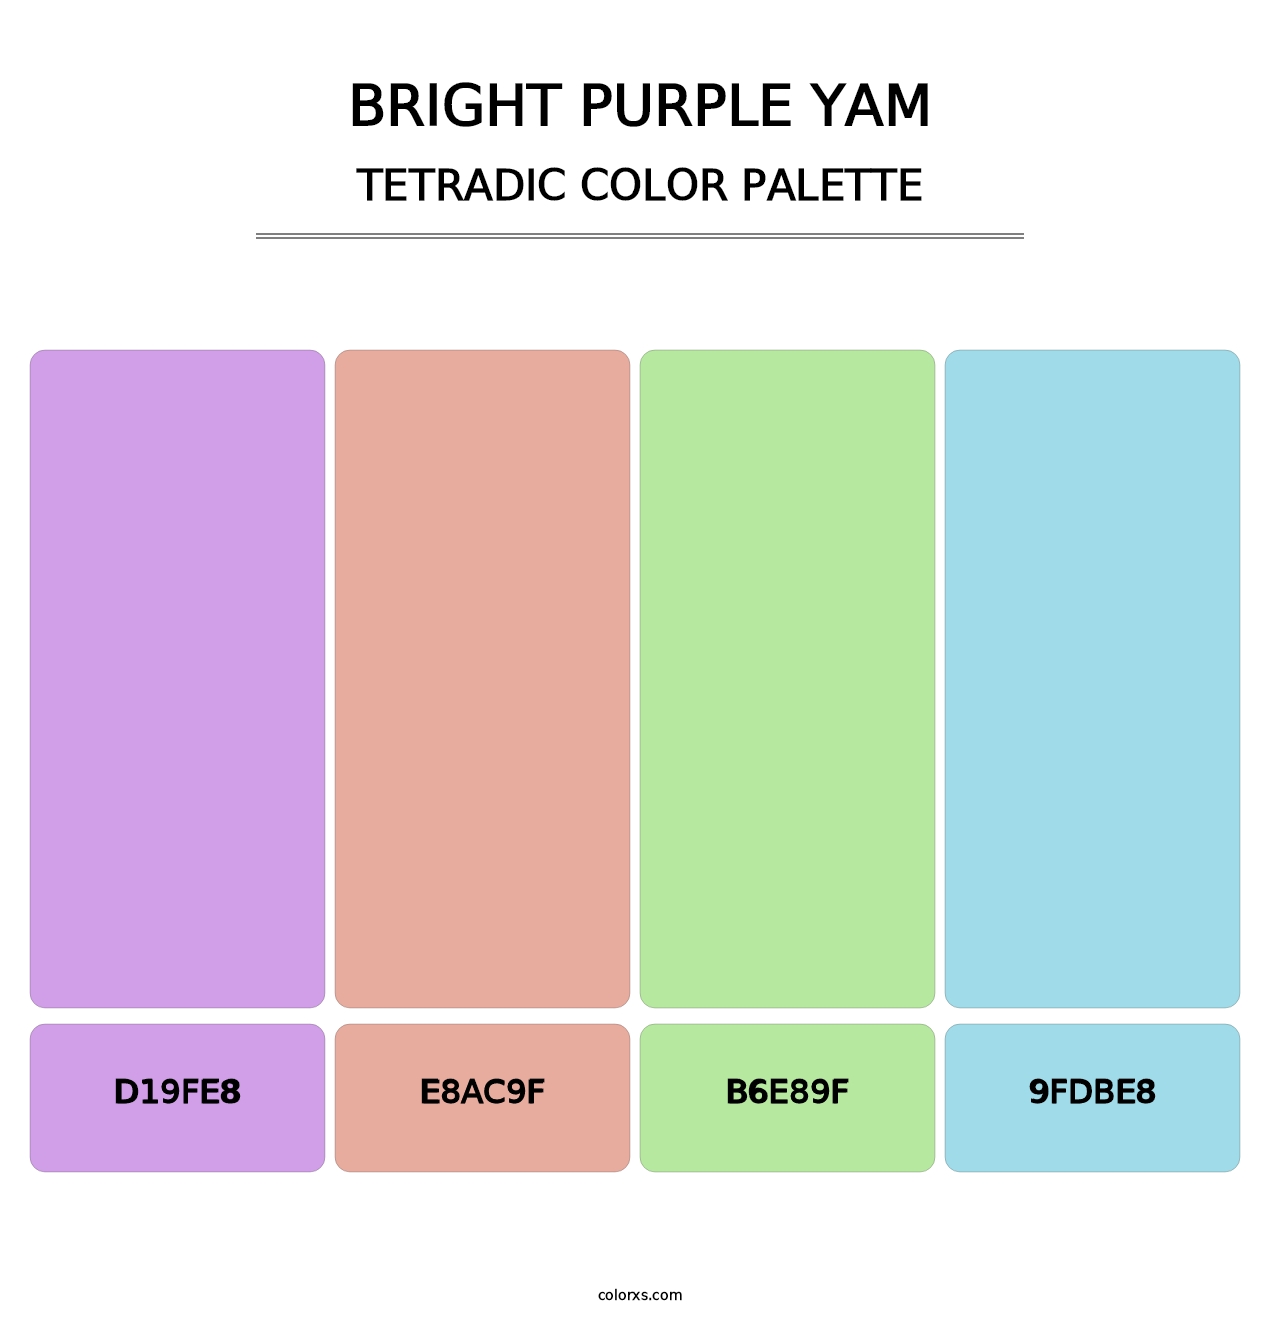 Bright Purple Yam - Tetradic Color Palette